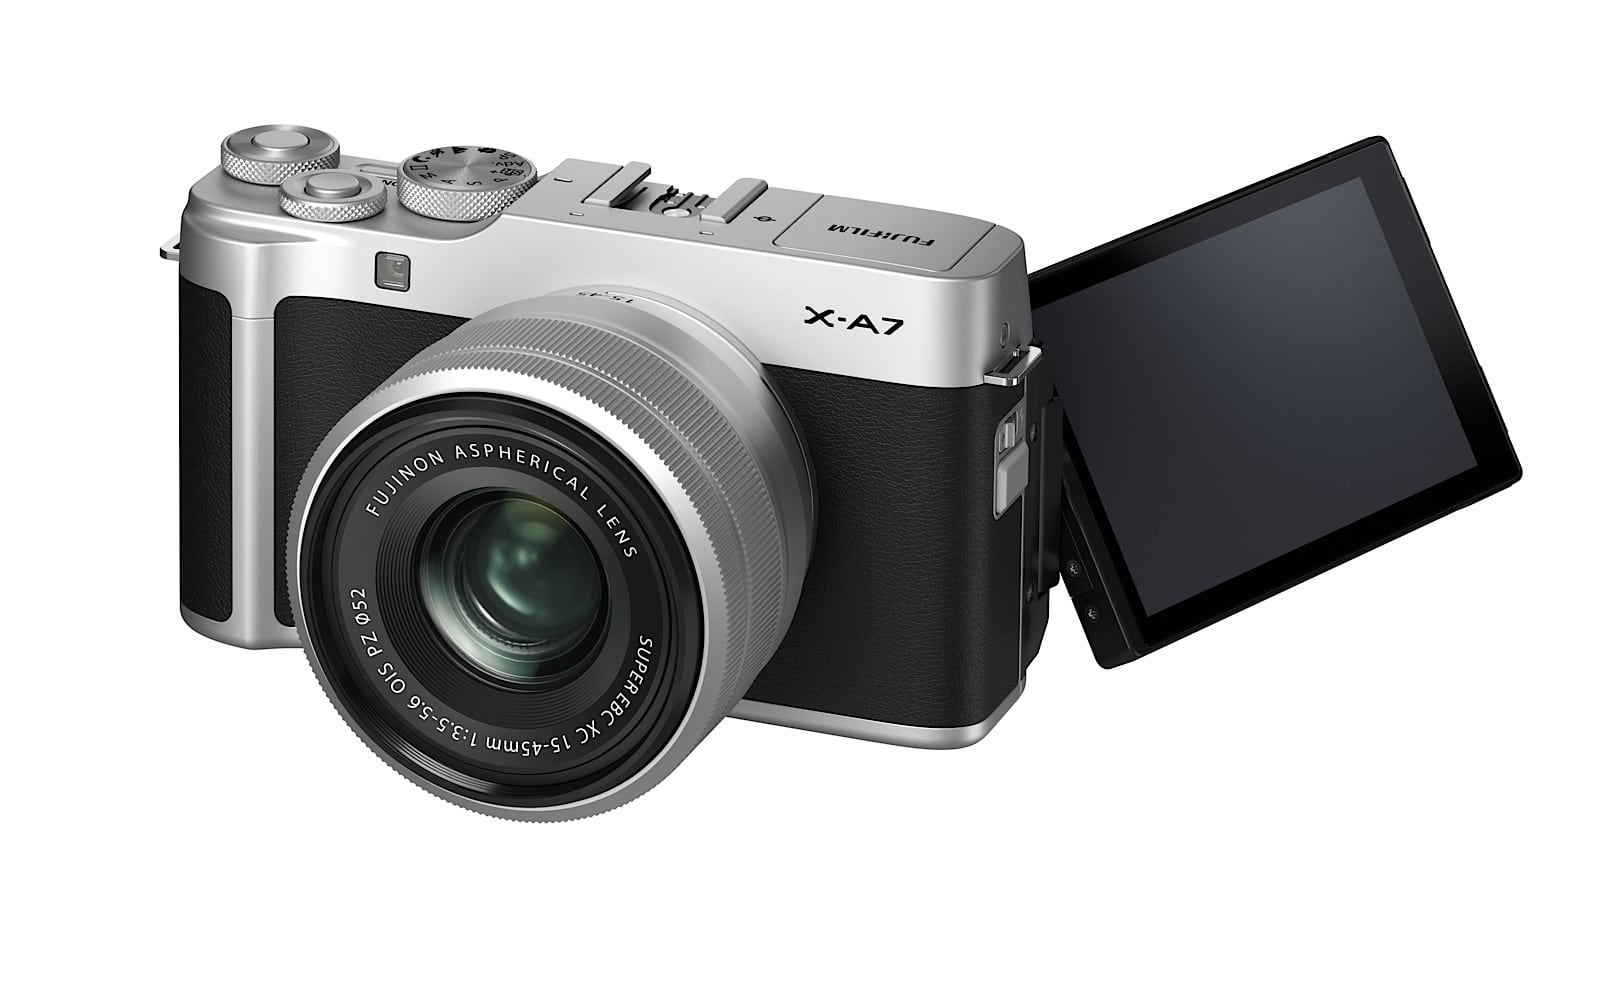 Fujifilm X-A7 mirrorless interchangeable camera